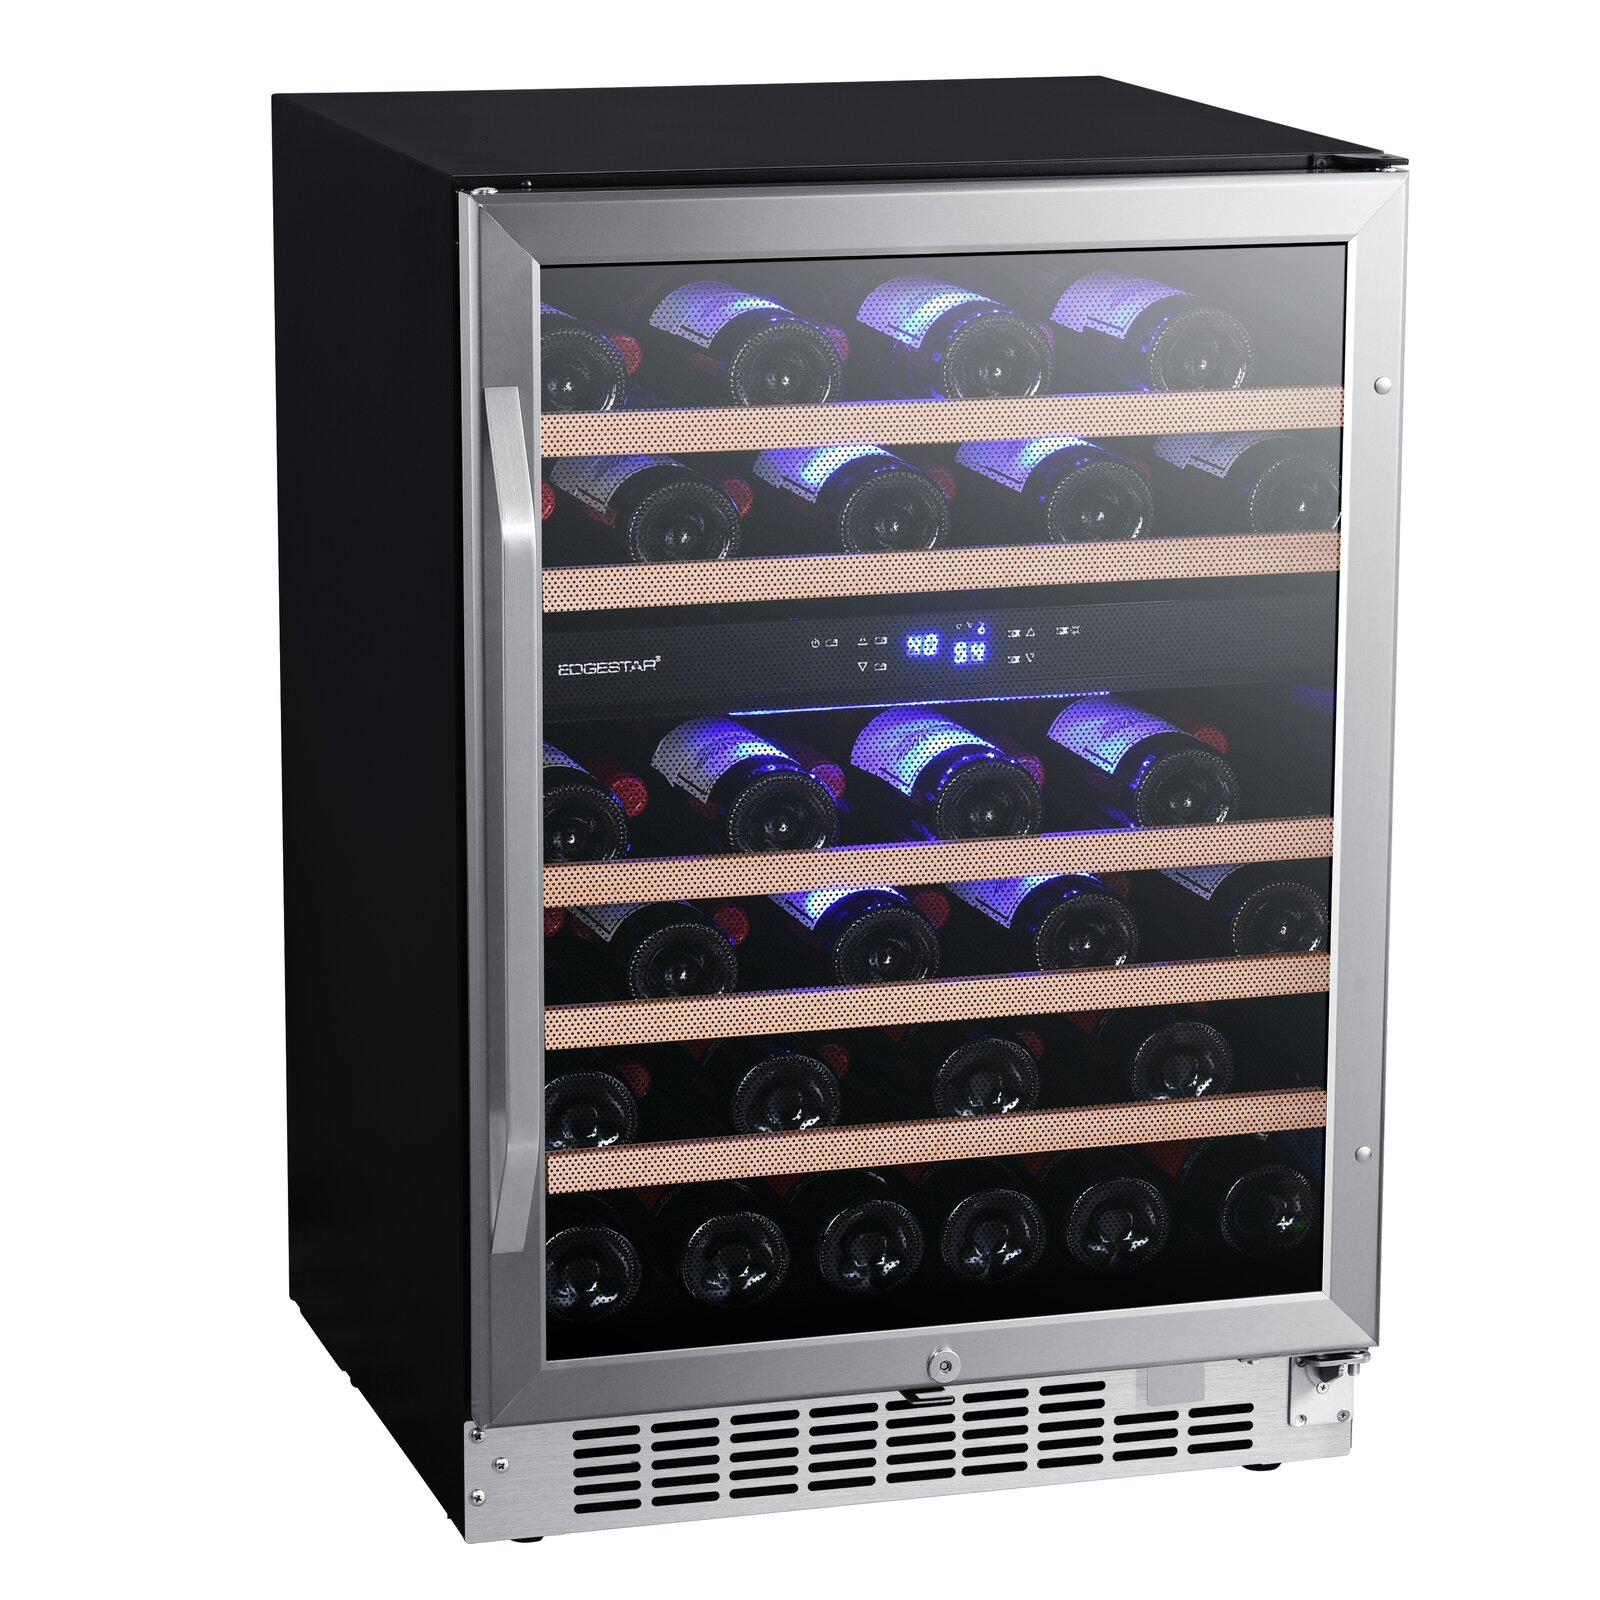 Edgestar 23.5'' width 46 Bottle Dual Zone Built-In Wine Refrigerator & Reviews